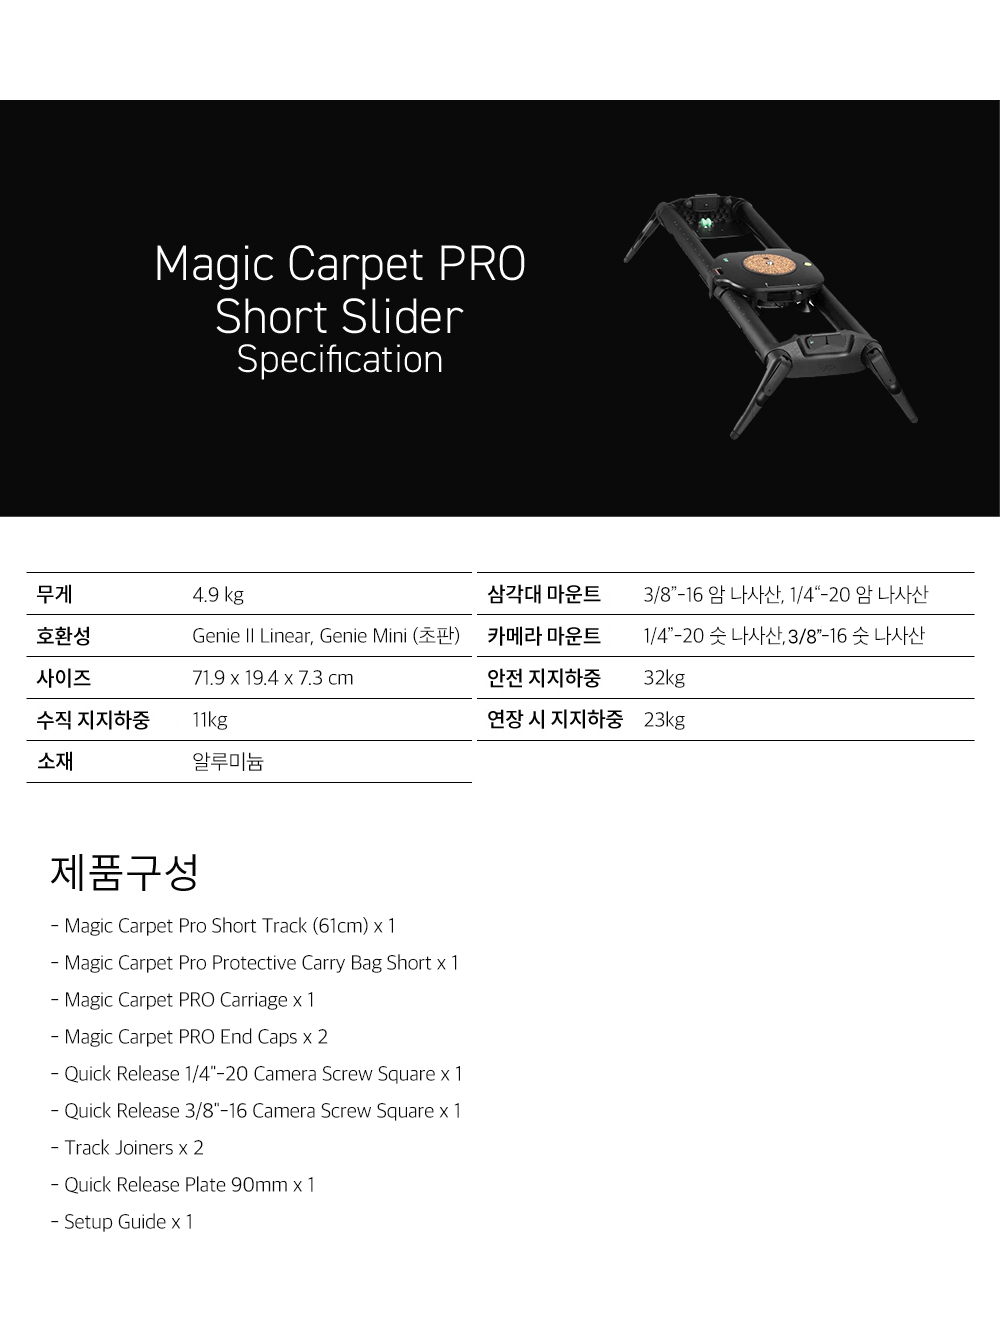 Magic Carpet PRO Short Slider